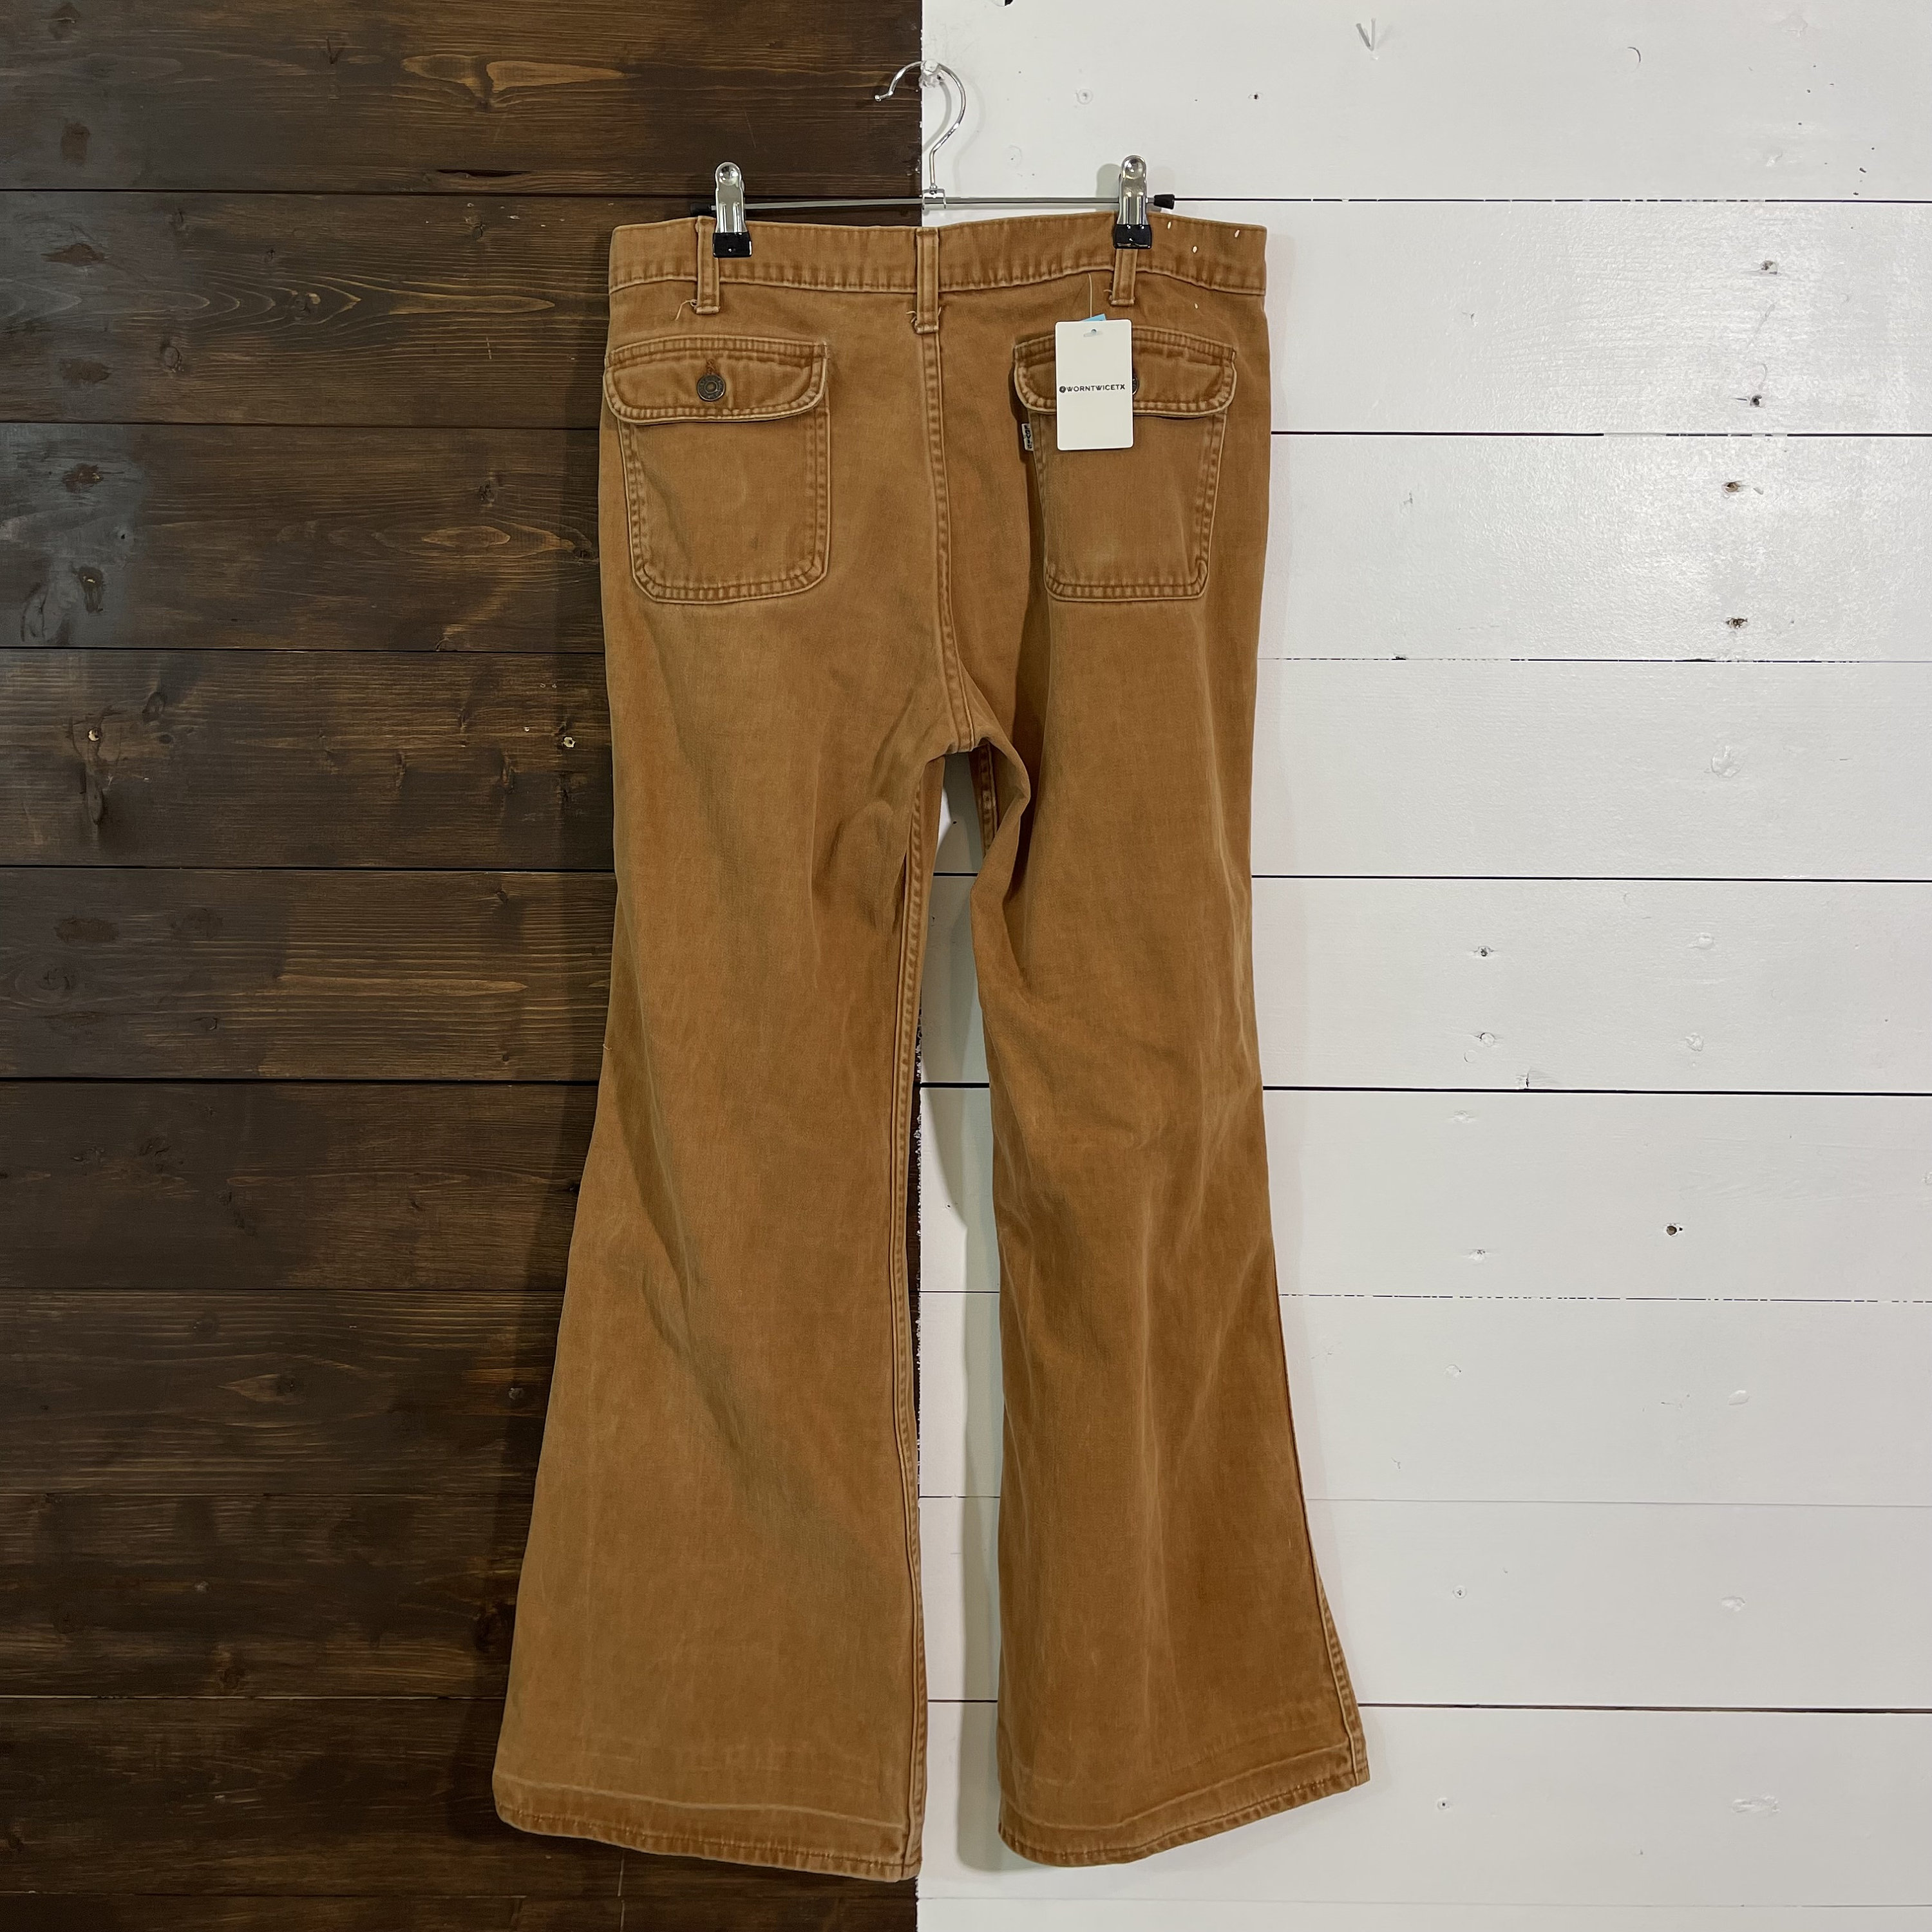 70s High Waist Flared Jeans | Men's Denim Jeans | Rad by Radgang